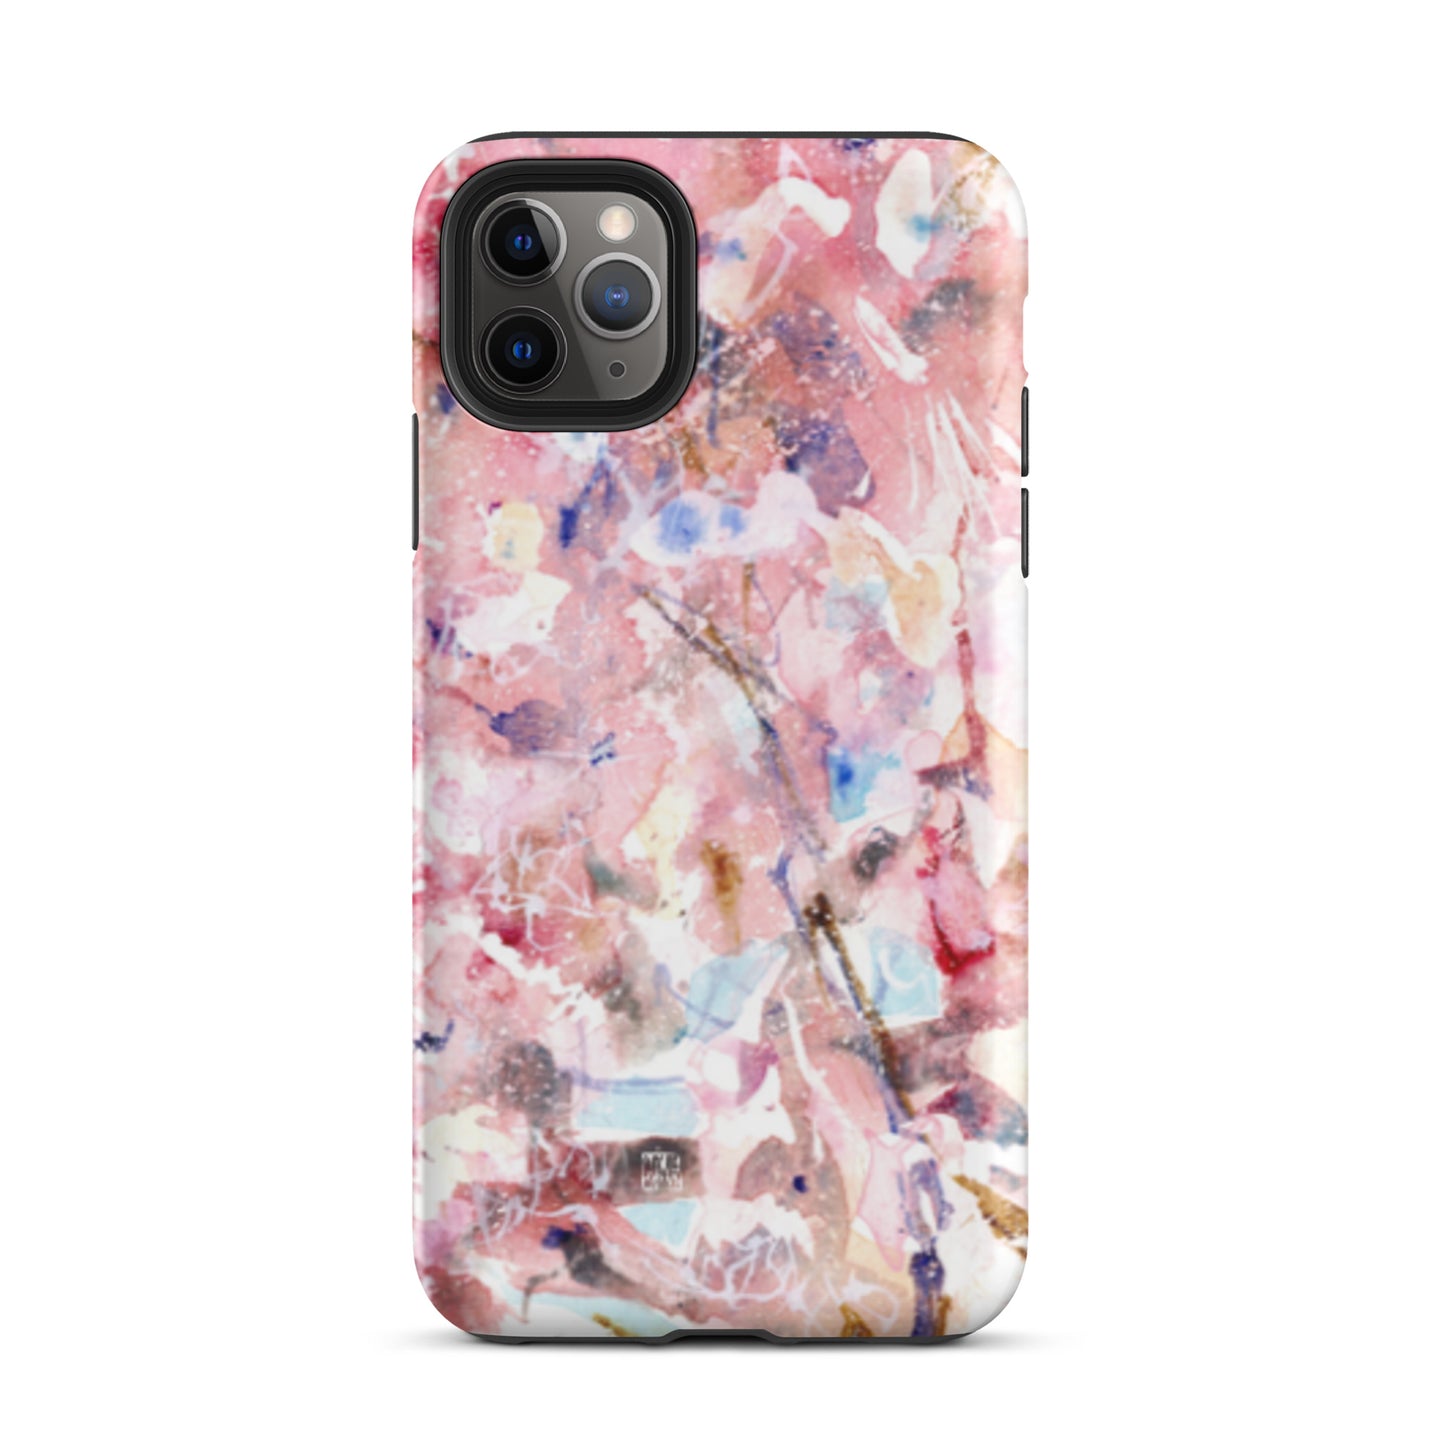 Tough iPhone Art Case - Cherry Blossom